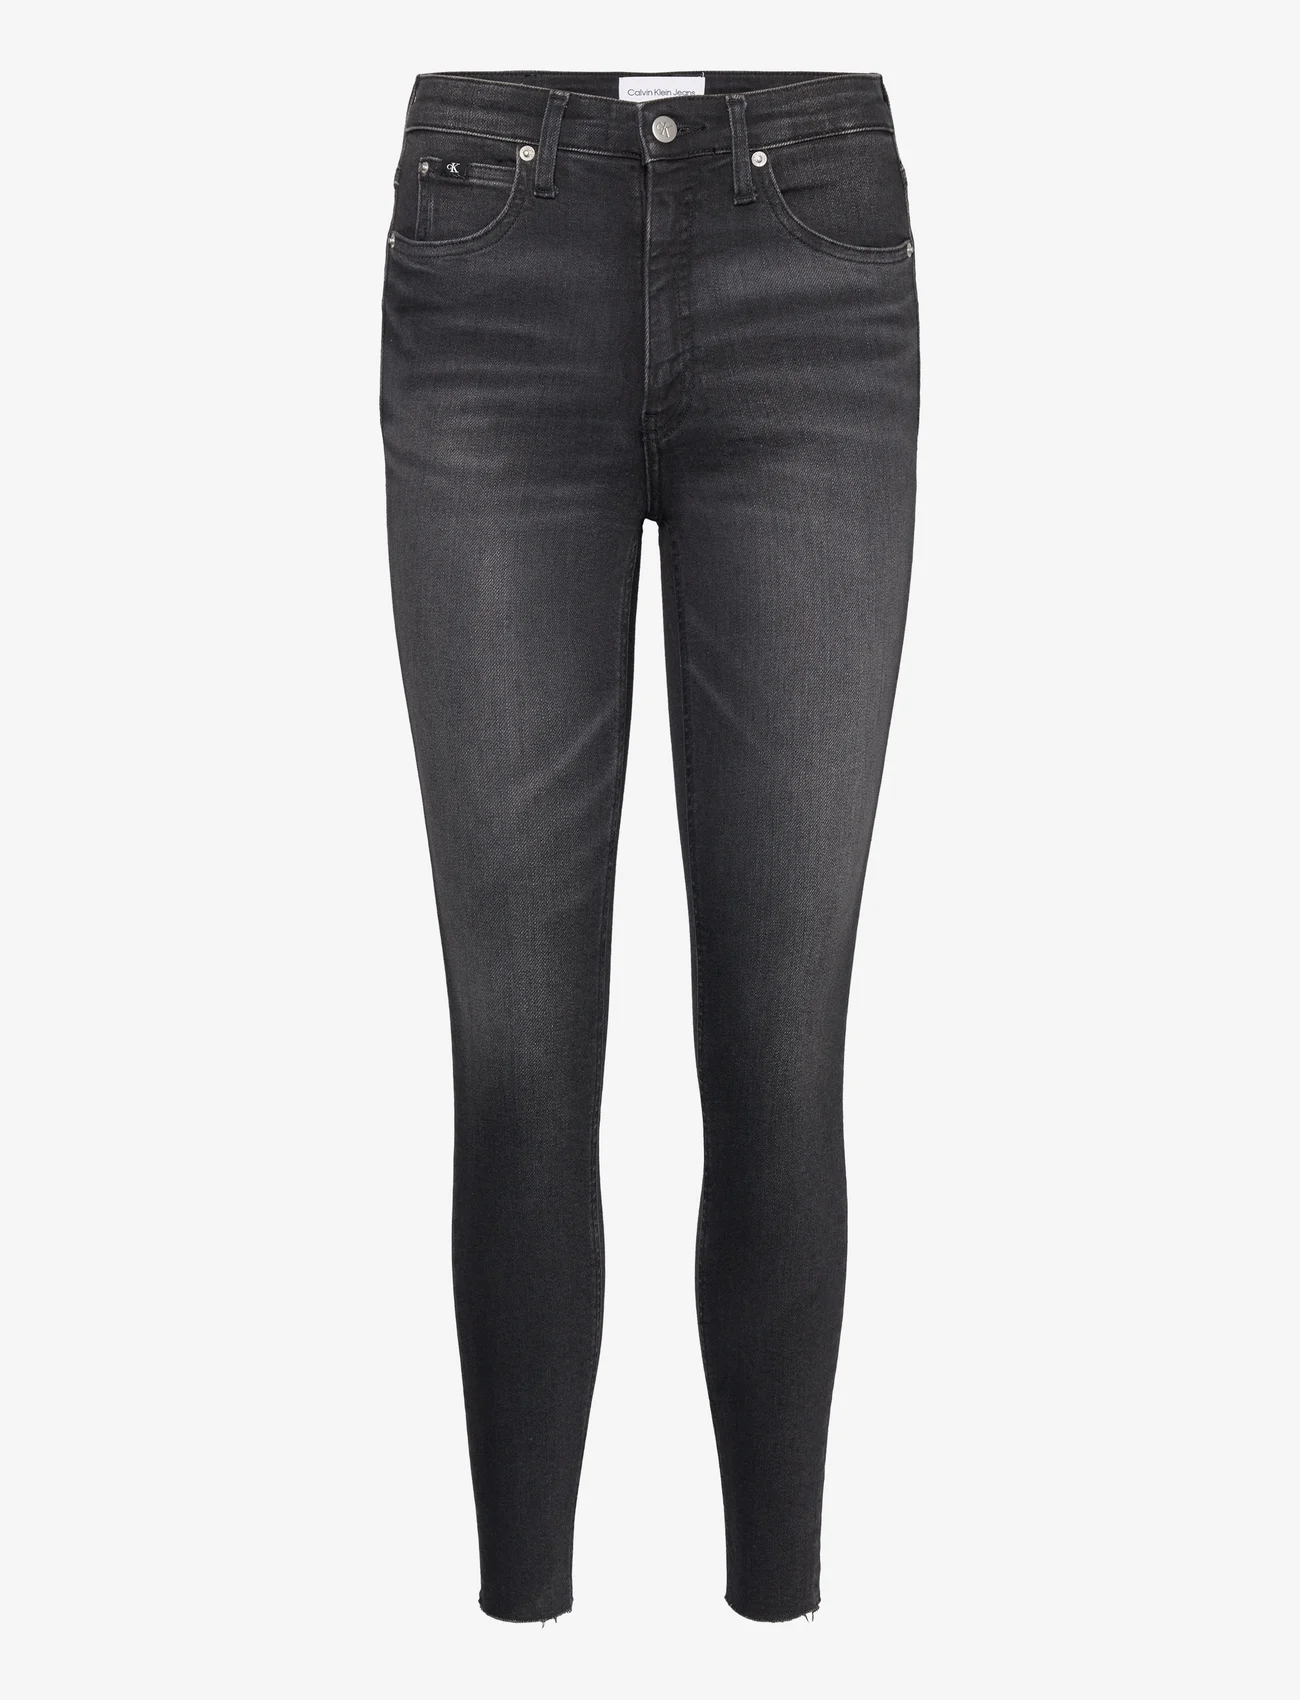 Calvin Klein Jeans - HIGH RISE SUPER SKINNY ANKLE - dżinsy skinny fit - denim black - 0